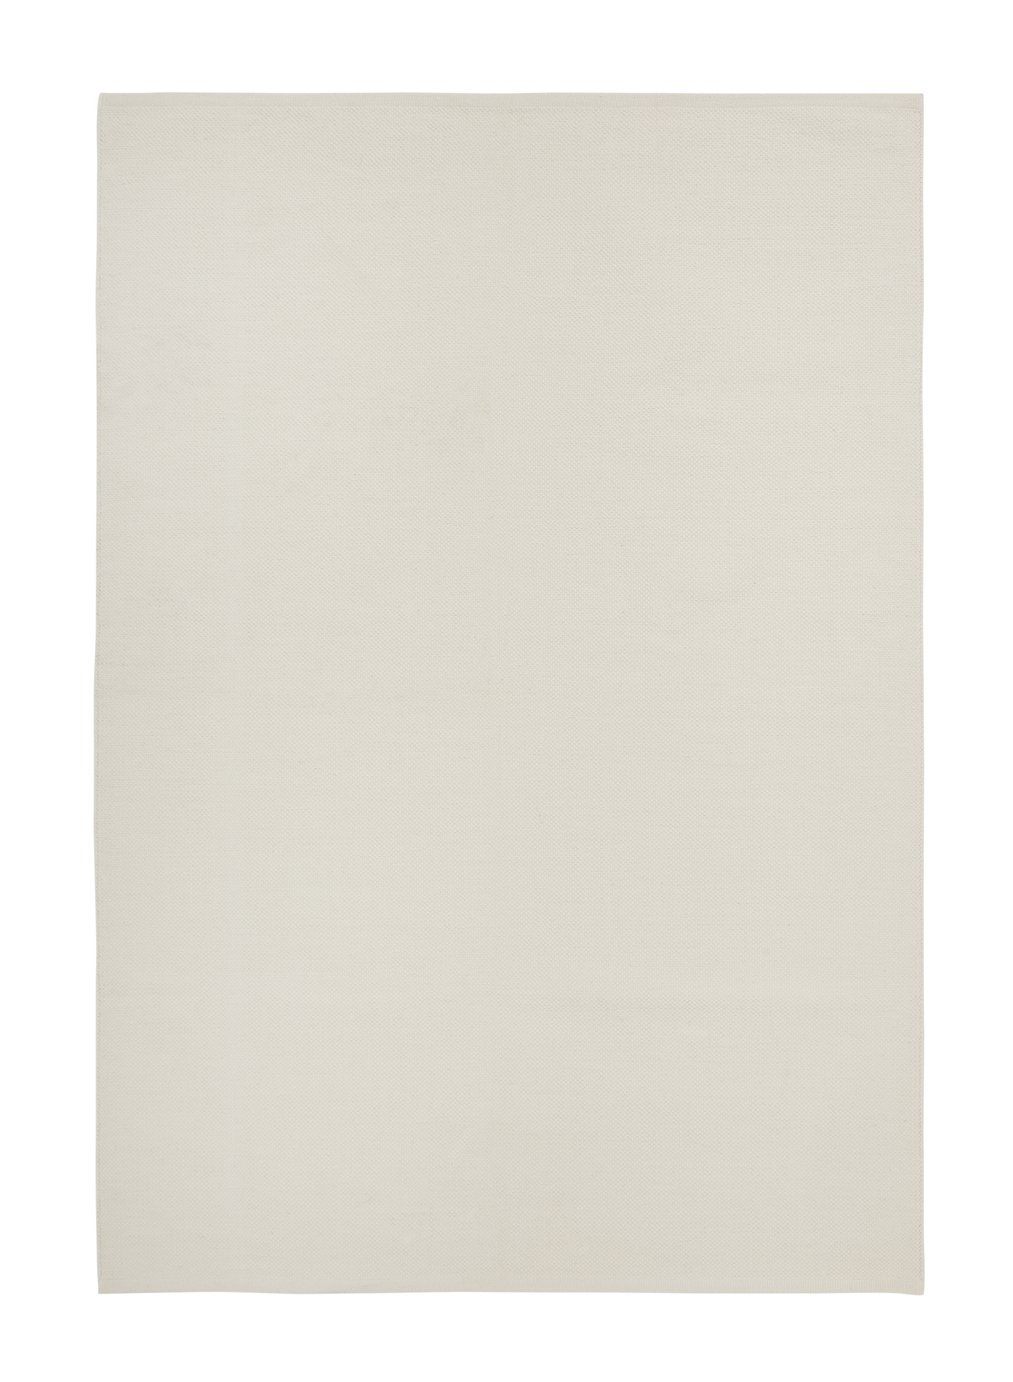 Argos Home Plain Cotton Flatweave Rug - 60x90cm - Cream 